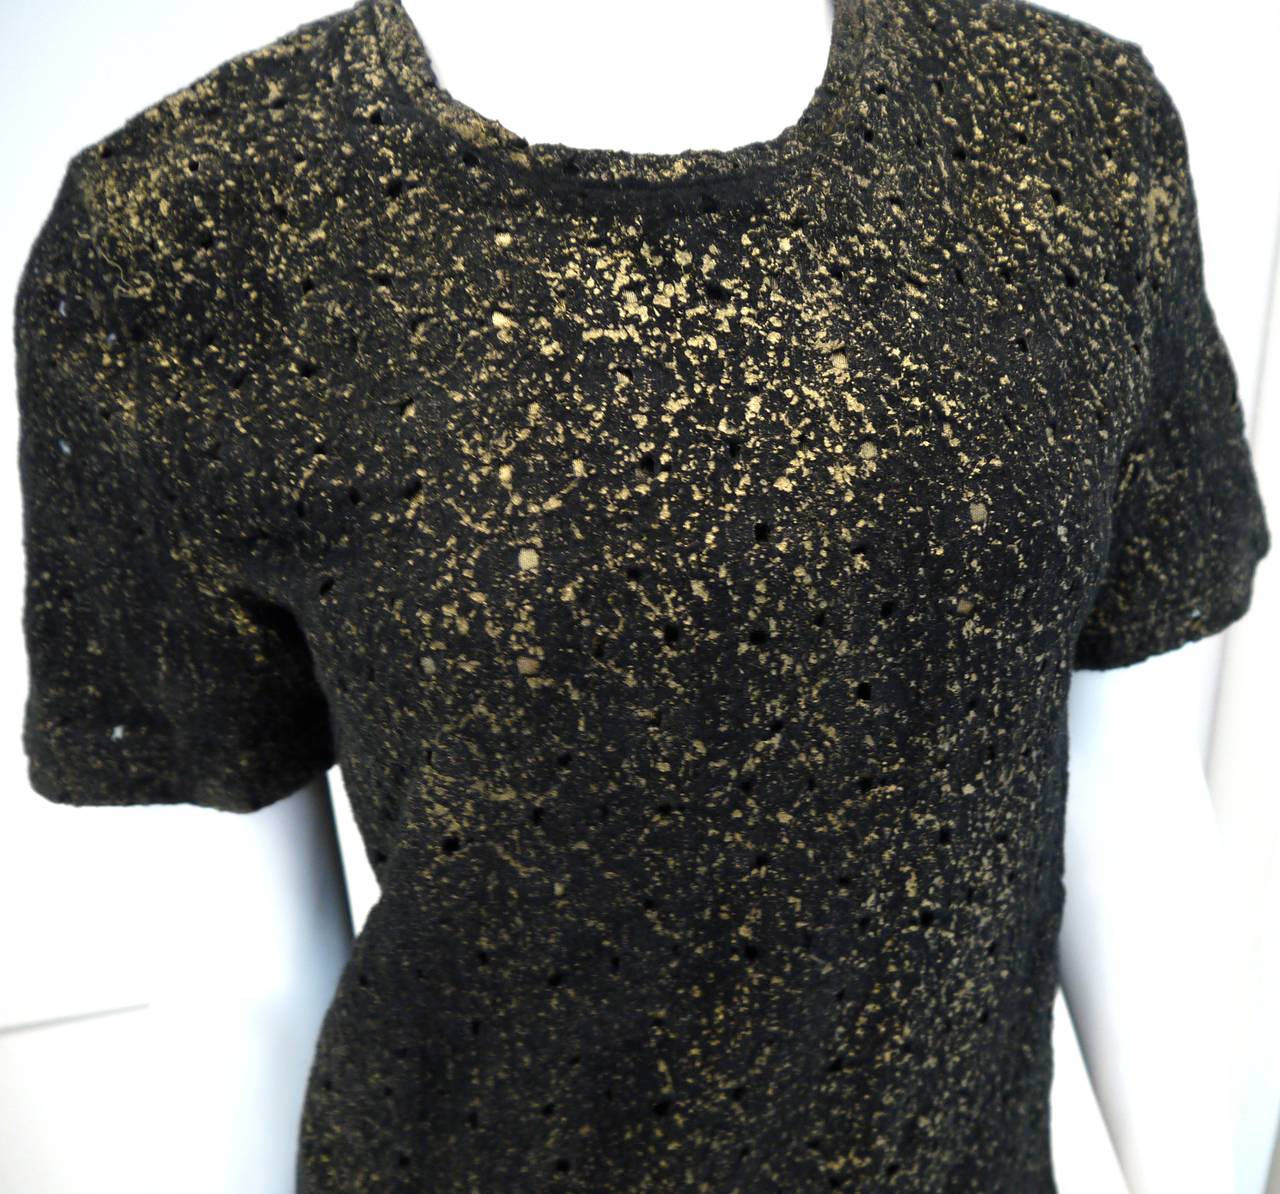 Bottega Veneta Black and Gold Shirt - Size 42 1